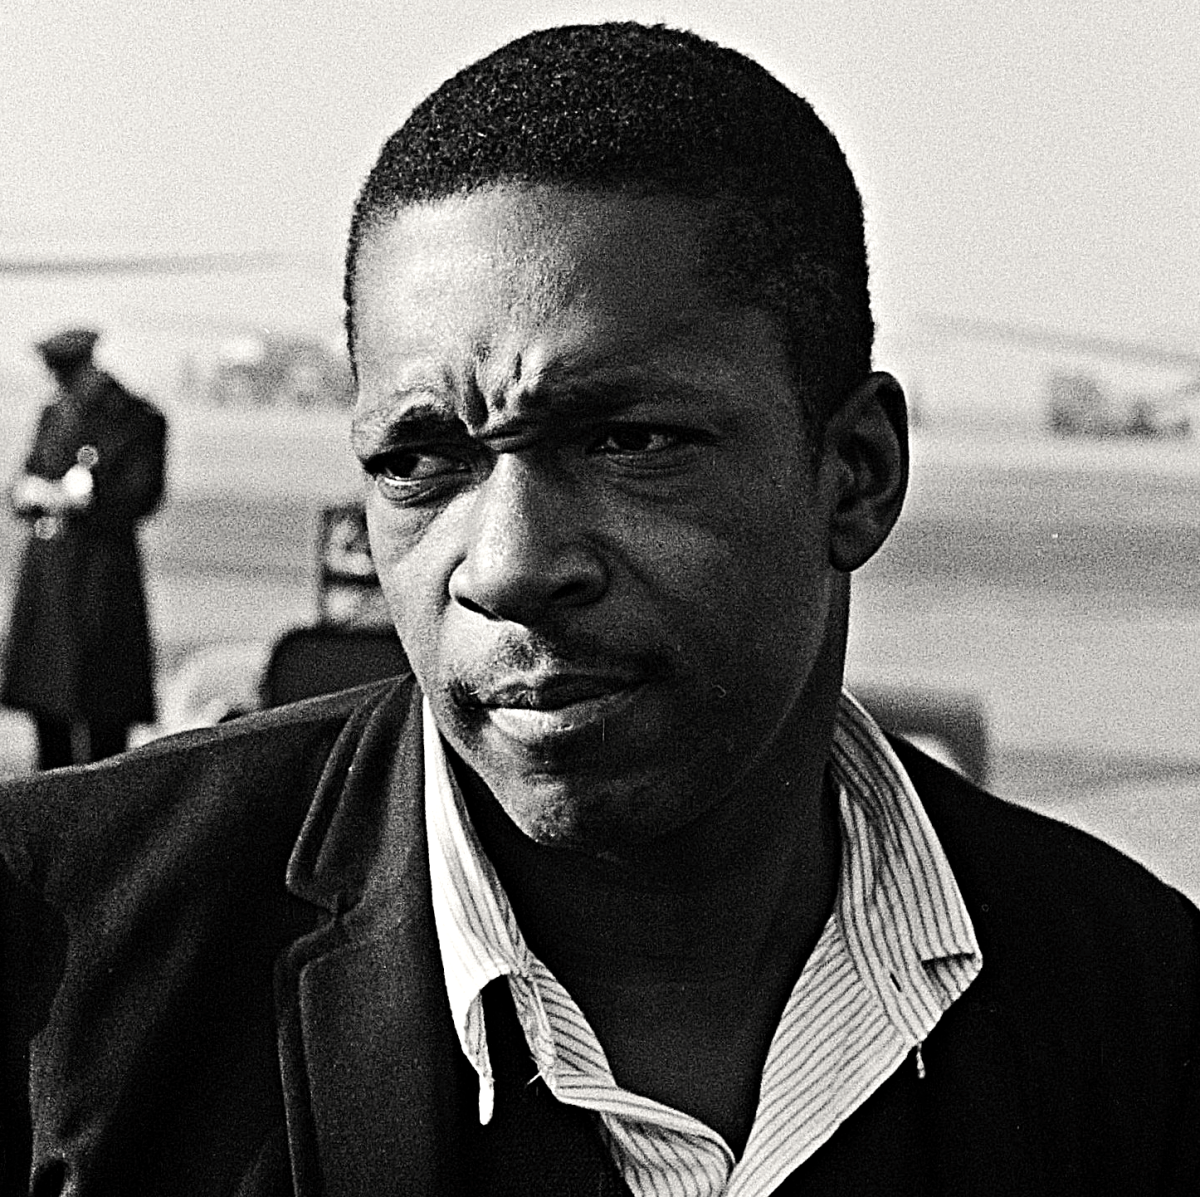 The great John Coltrane in 1963.